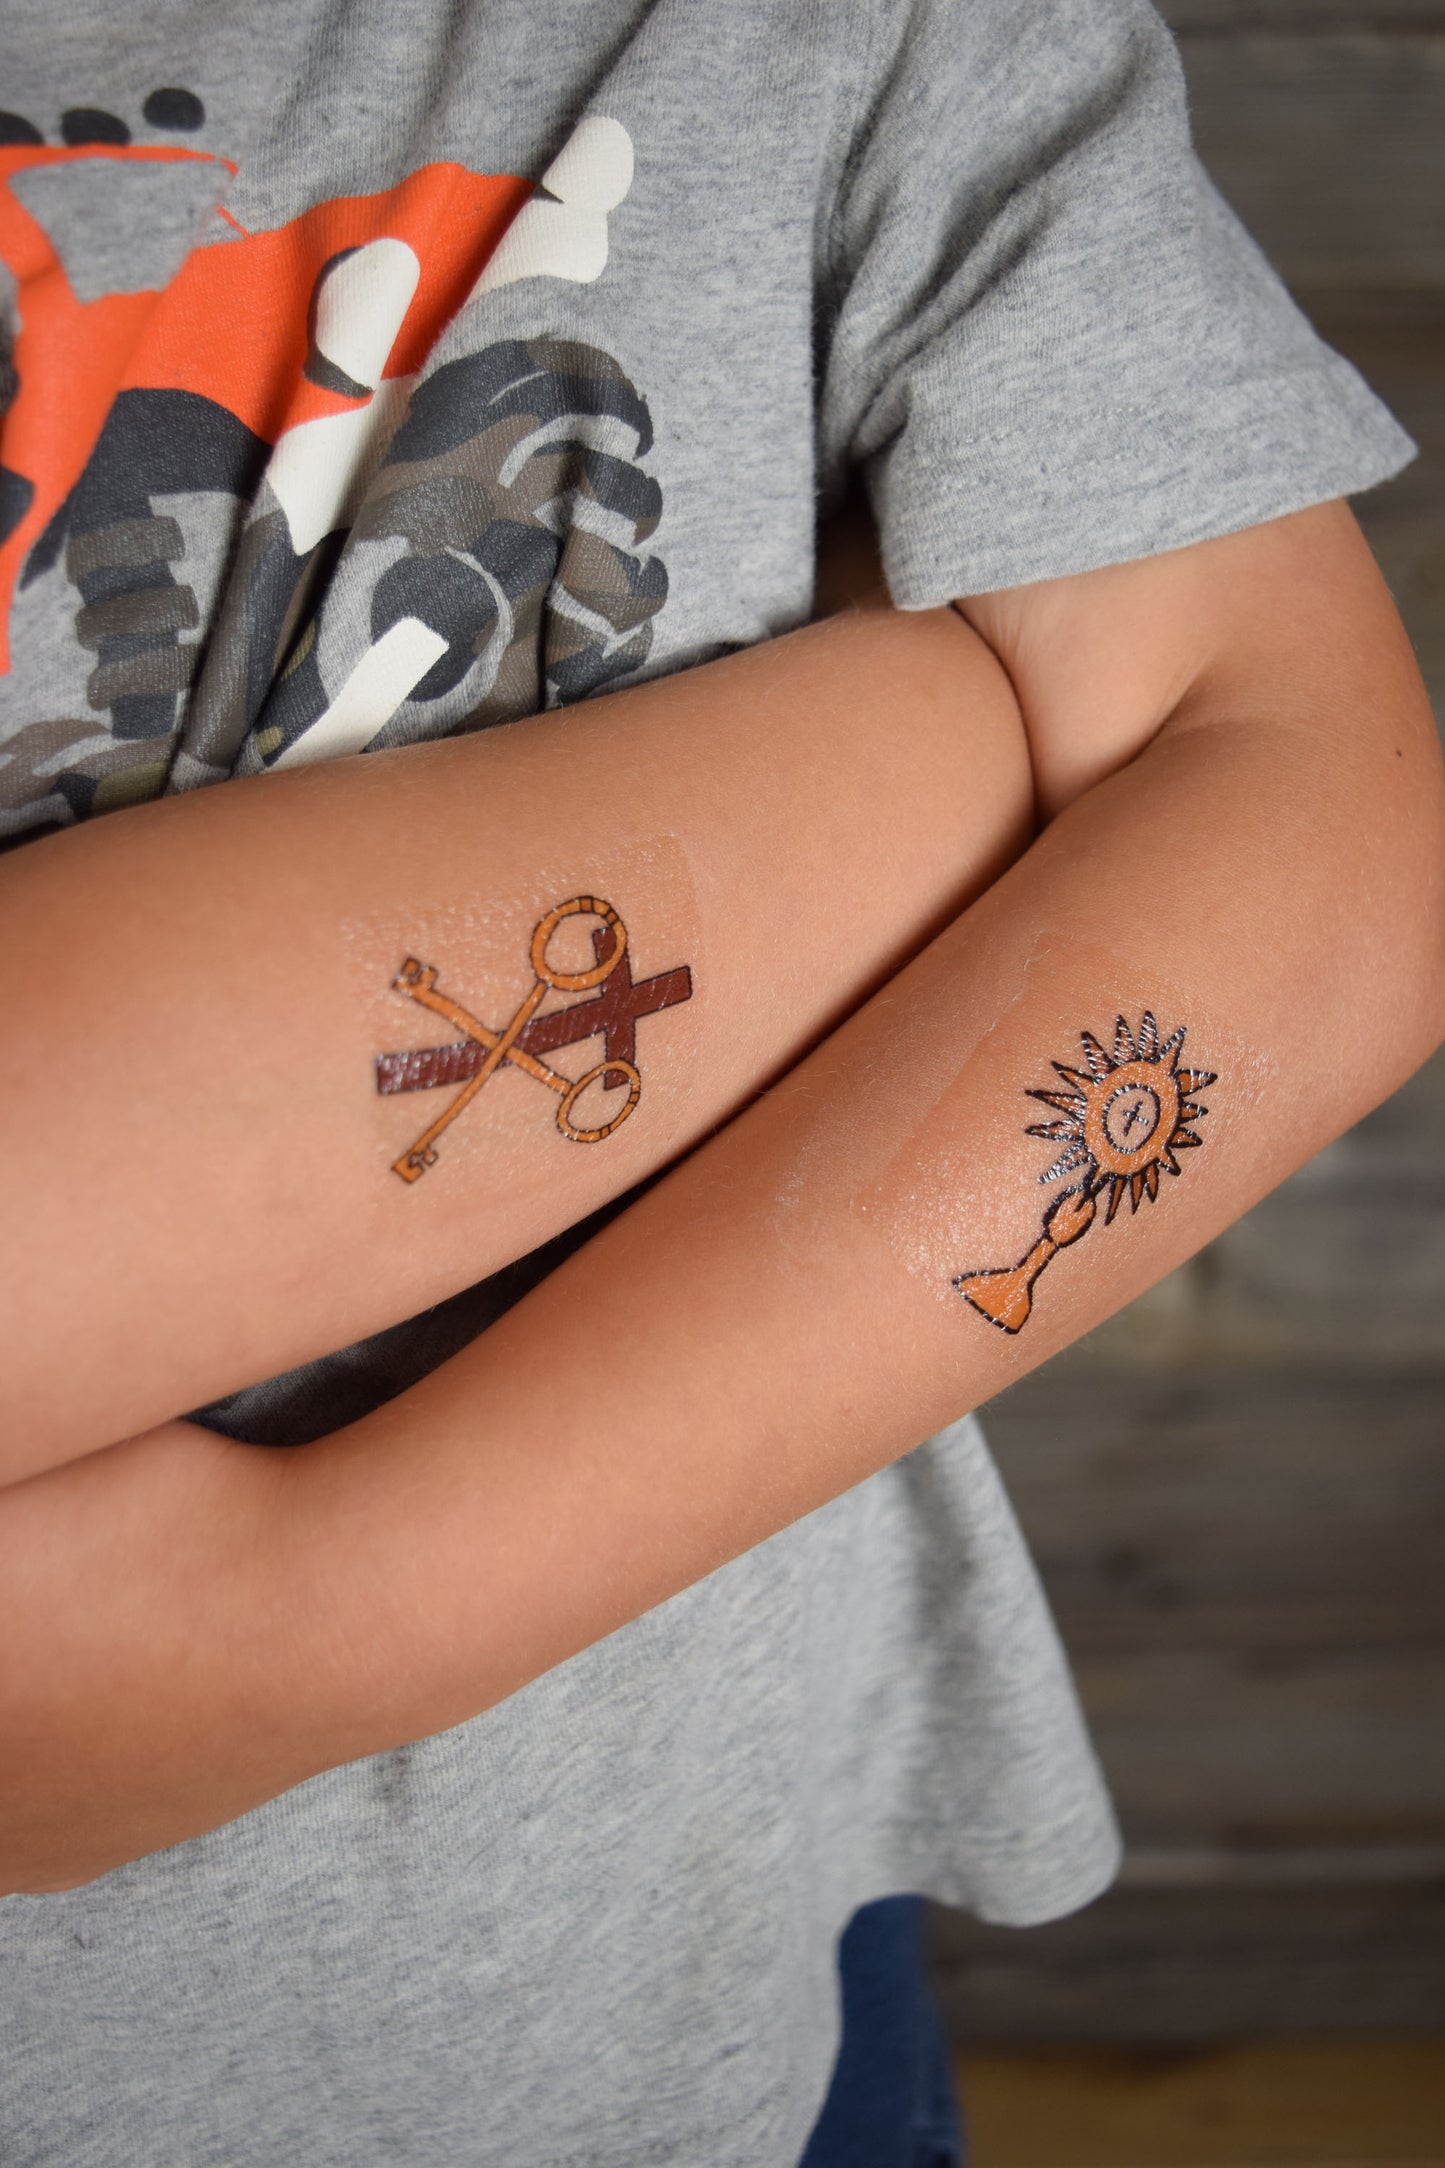 Catholic Boy Temporary Tattoos